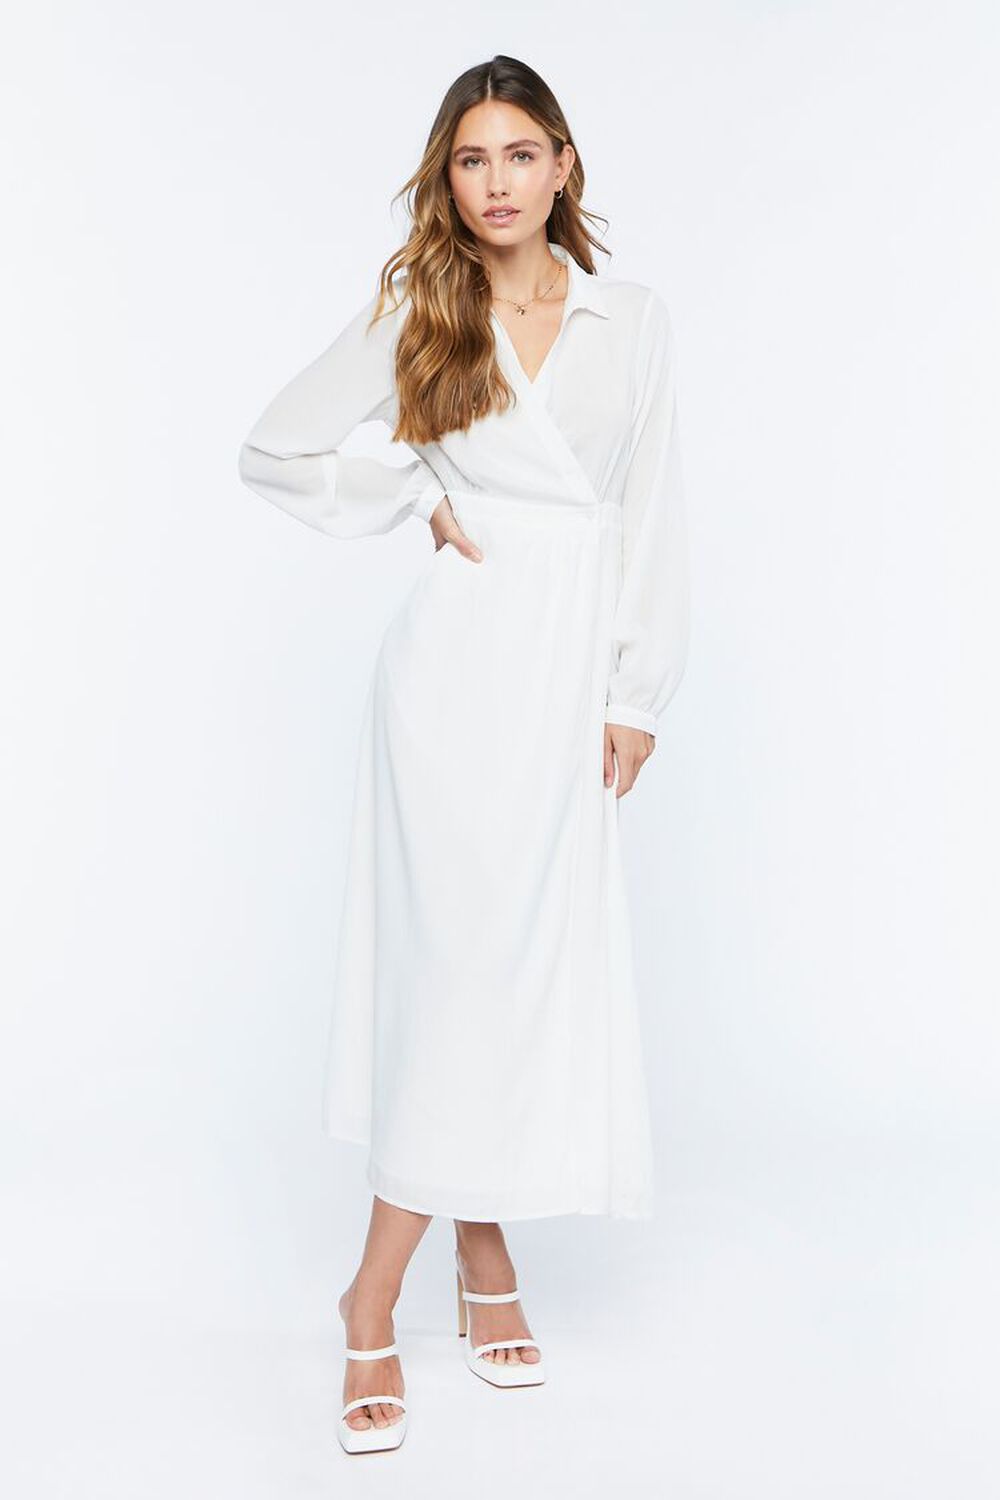 WHITE Collared Wrap Maxi Dress, image 1